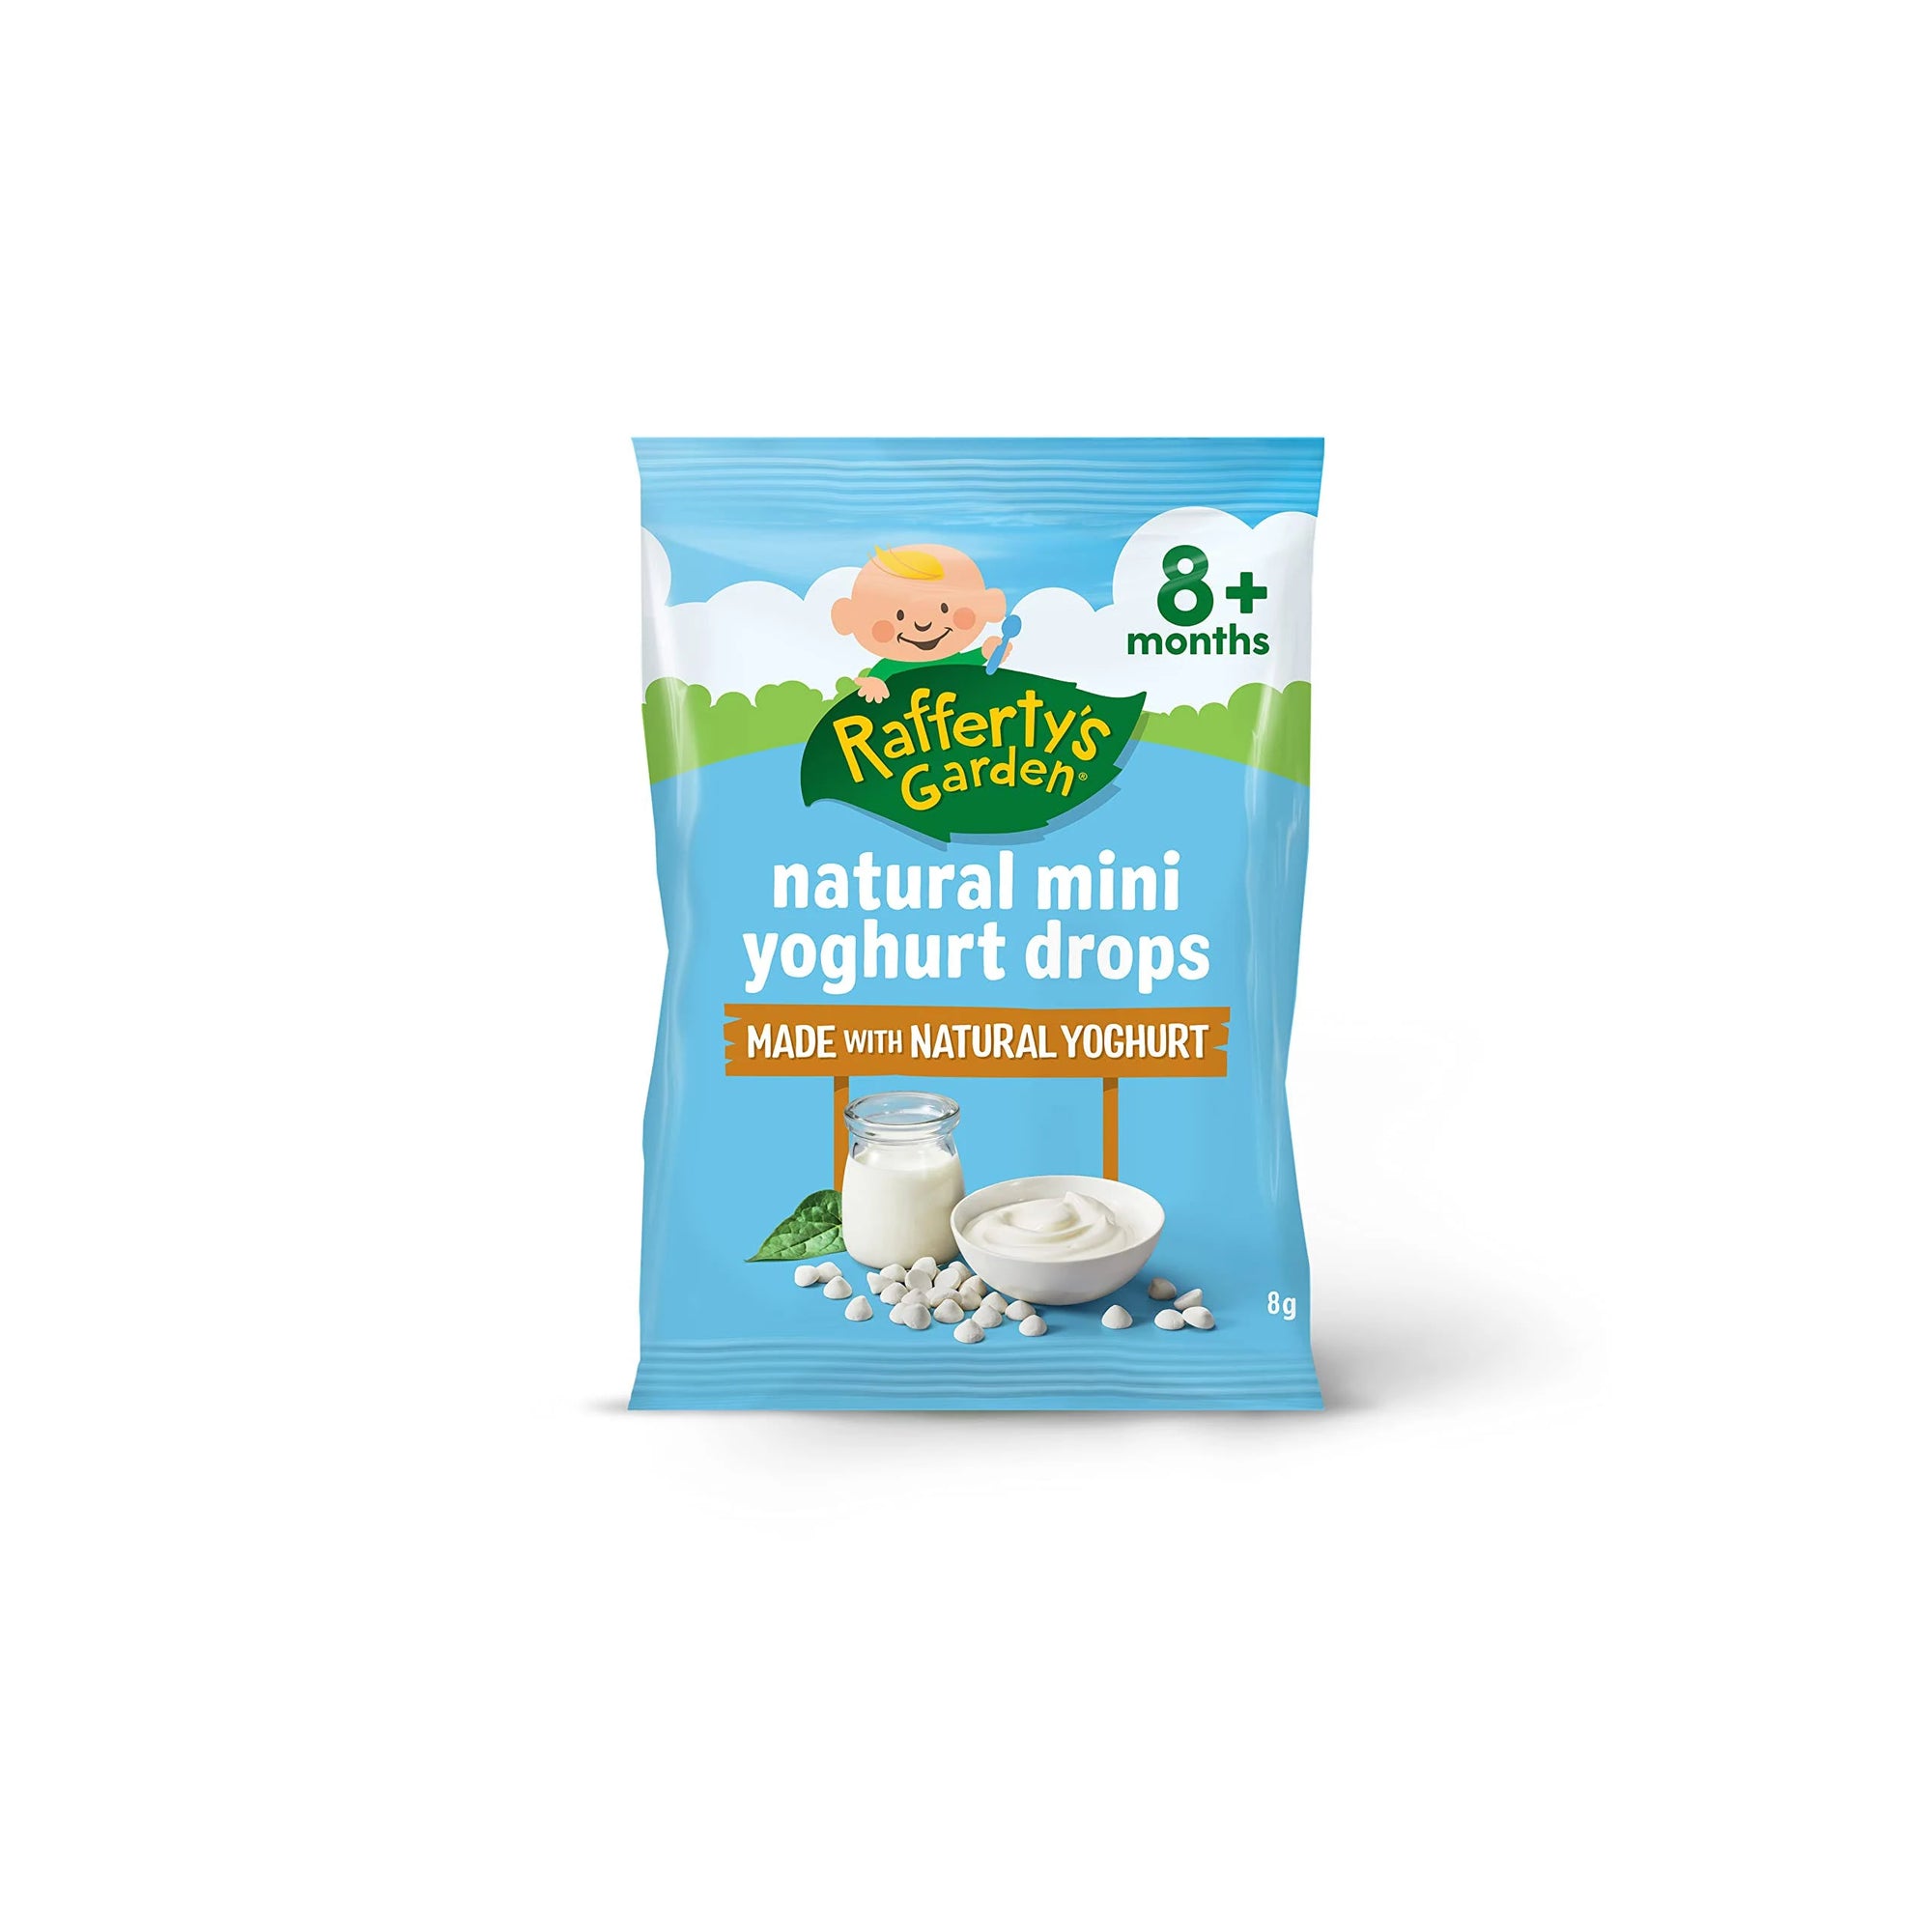 Rafferty's Garden Yoghurt Drops Mini Natural 8g